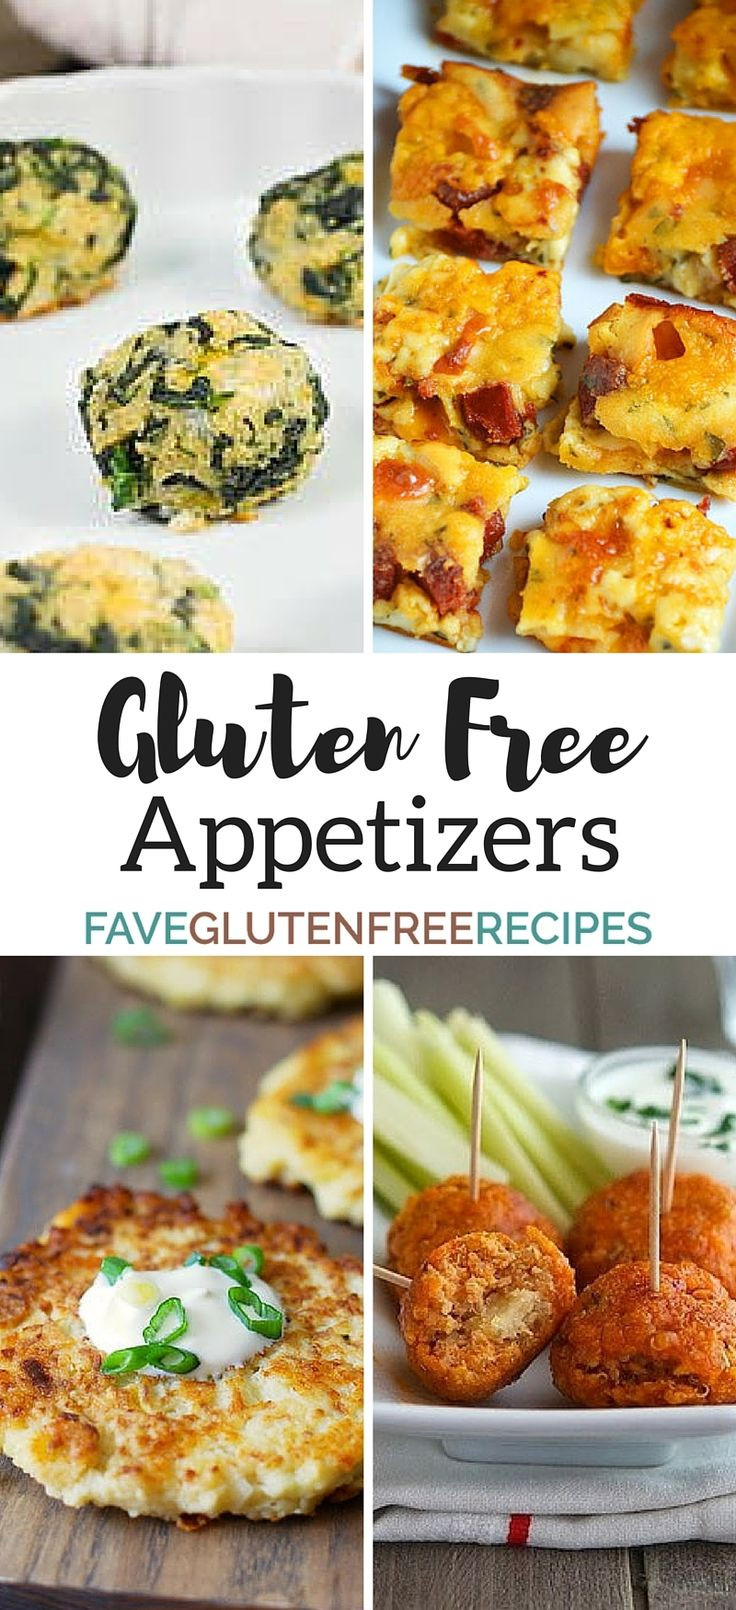 Gluten Dairy Free Appetizers
 Best 147 Gluten Free Appetizers images on Pinterest